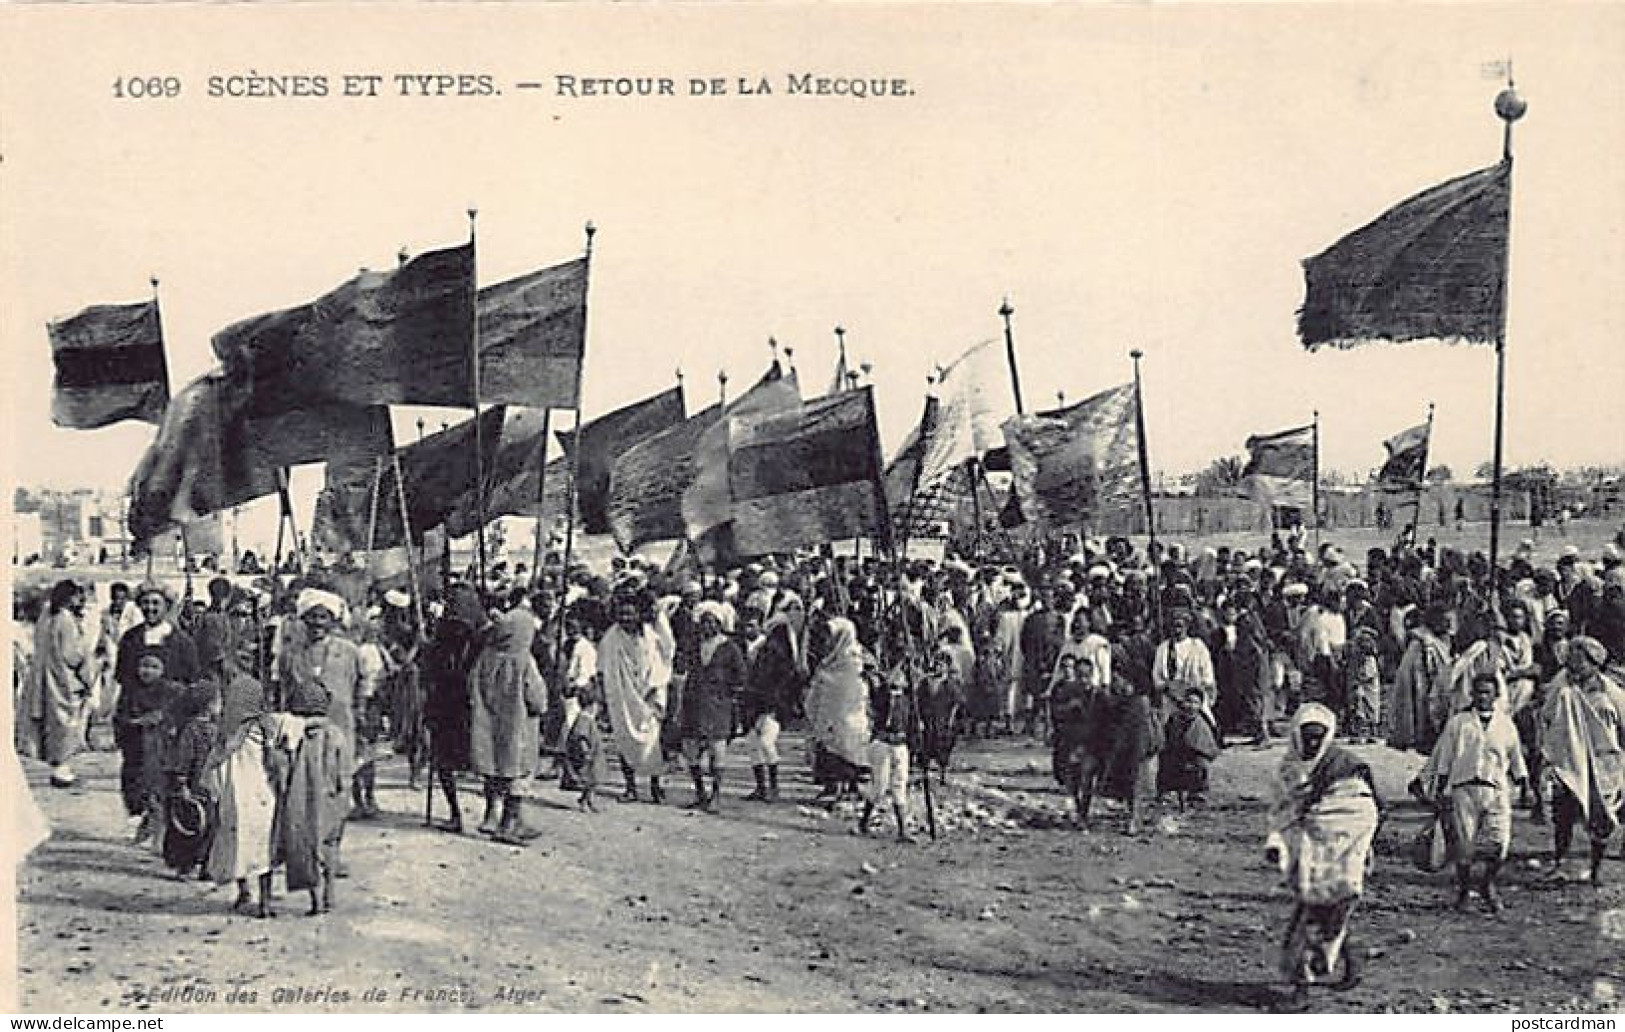 Saudi Arabia - Algerian Pilgrims Back From Mecca - Publ. Galeries De France In Algiers, Algeria1069 - Arabia Saudita